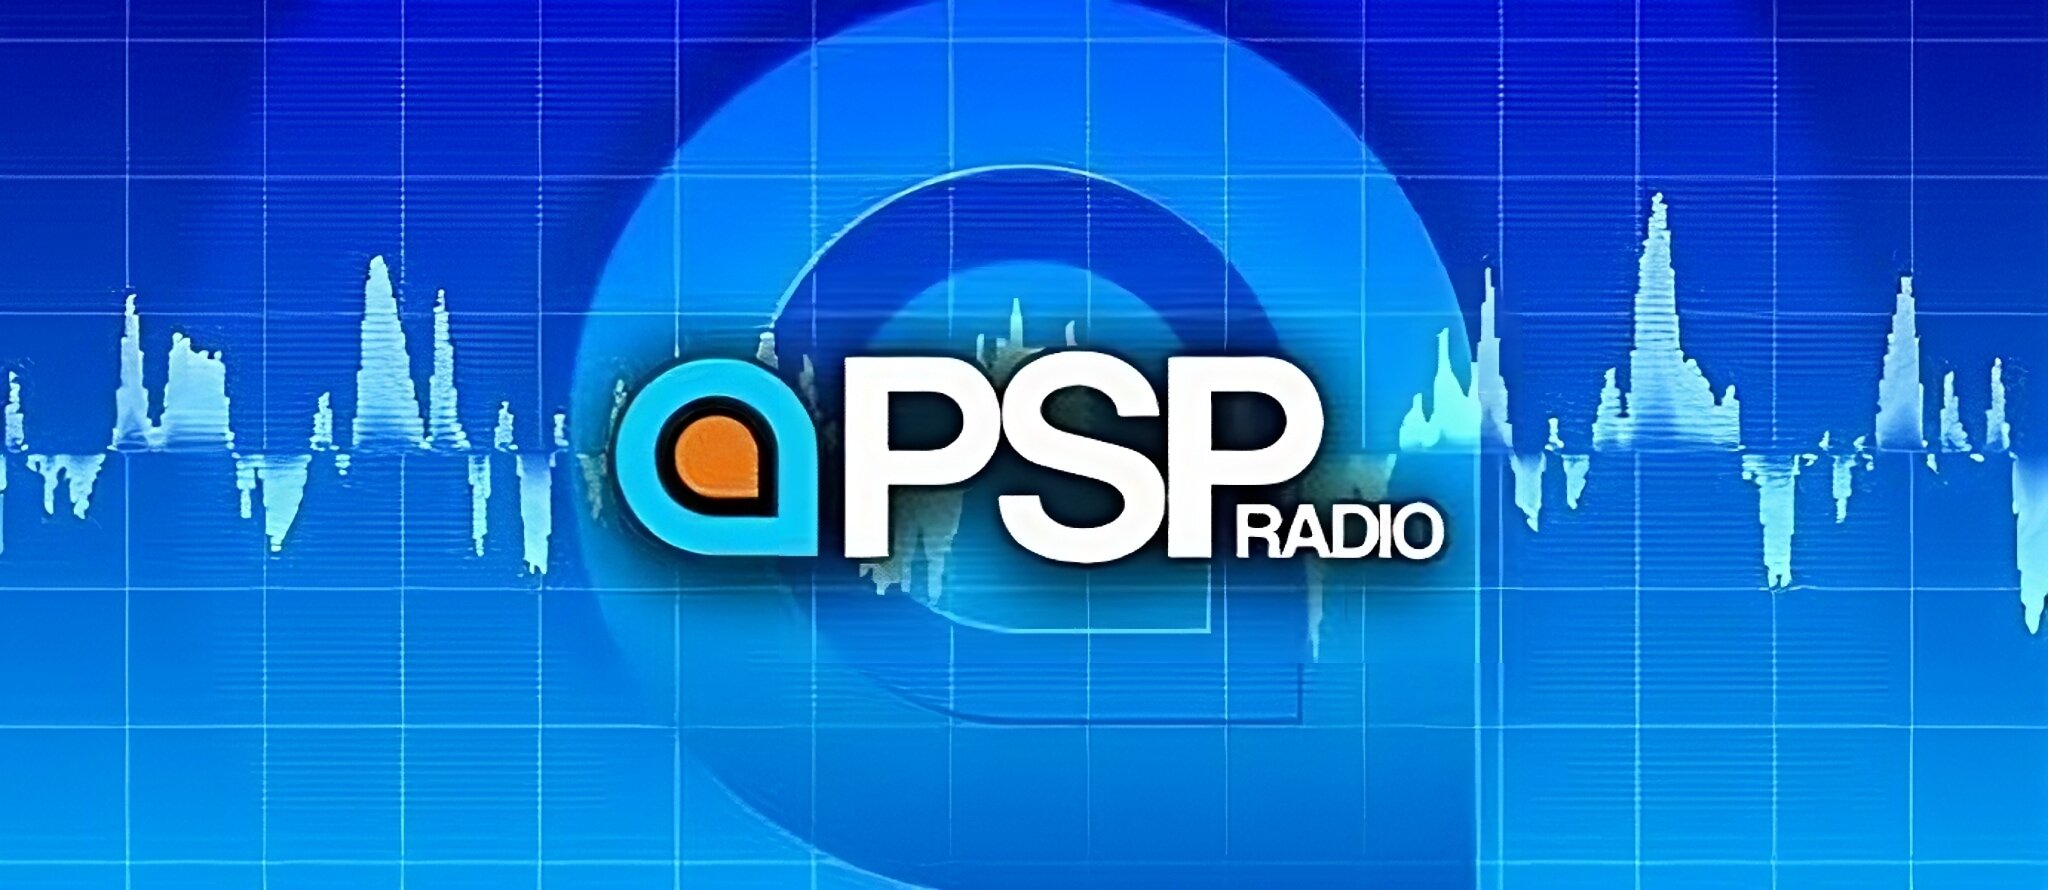 PSP Radio – Shoutcast für die PlayStation Portable